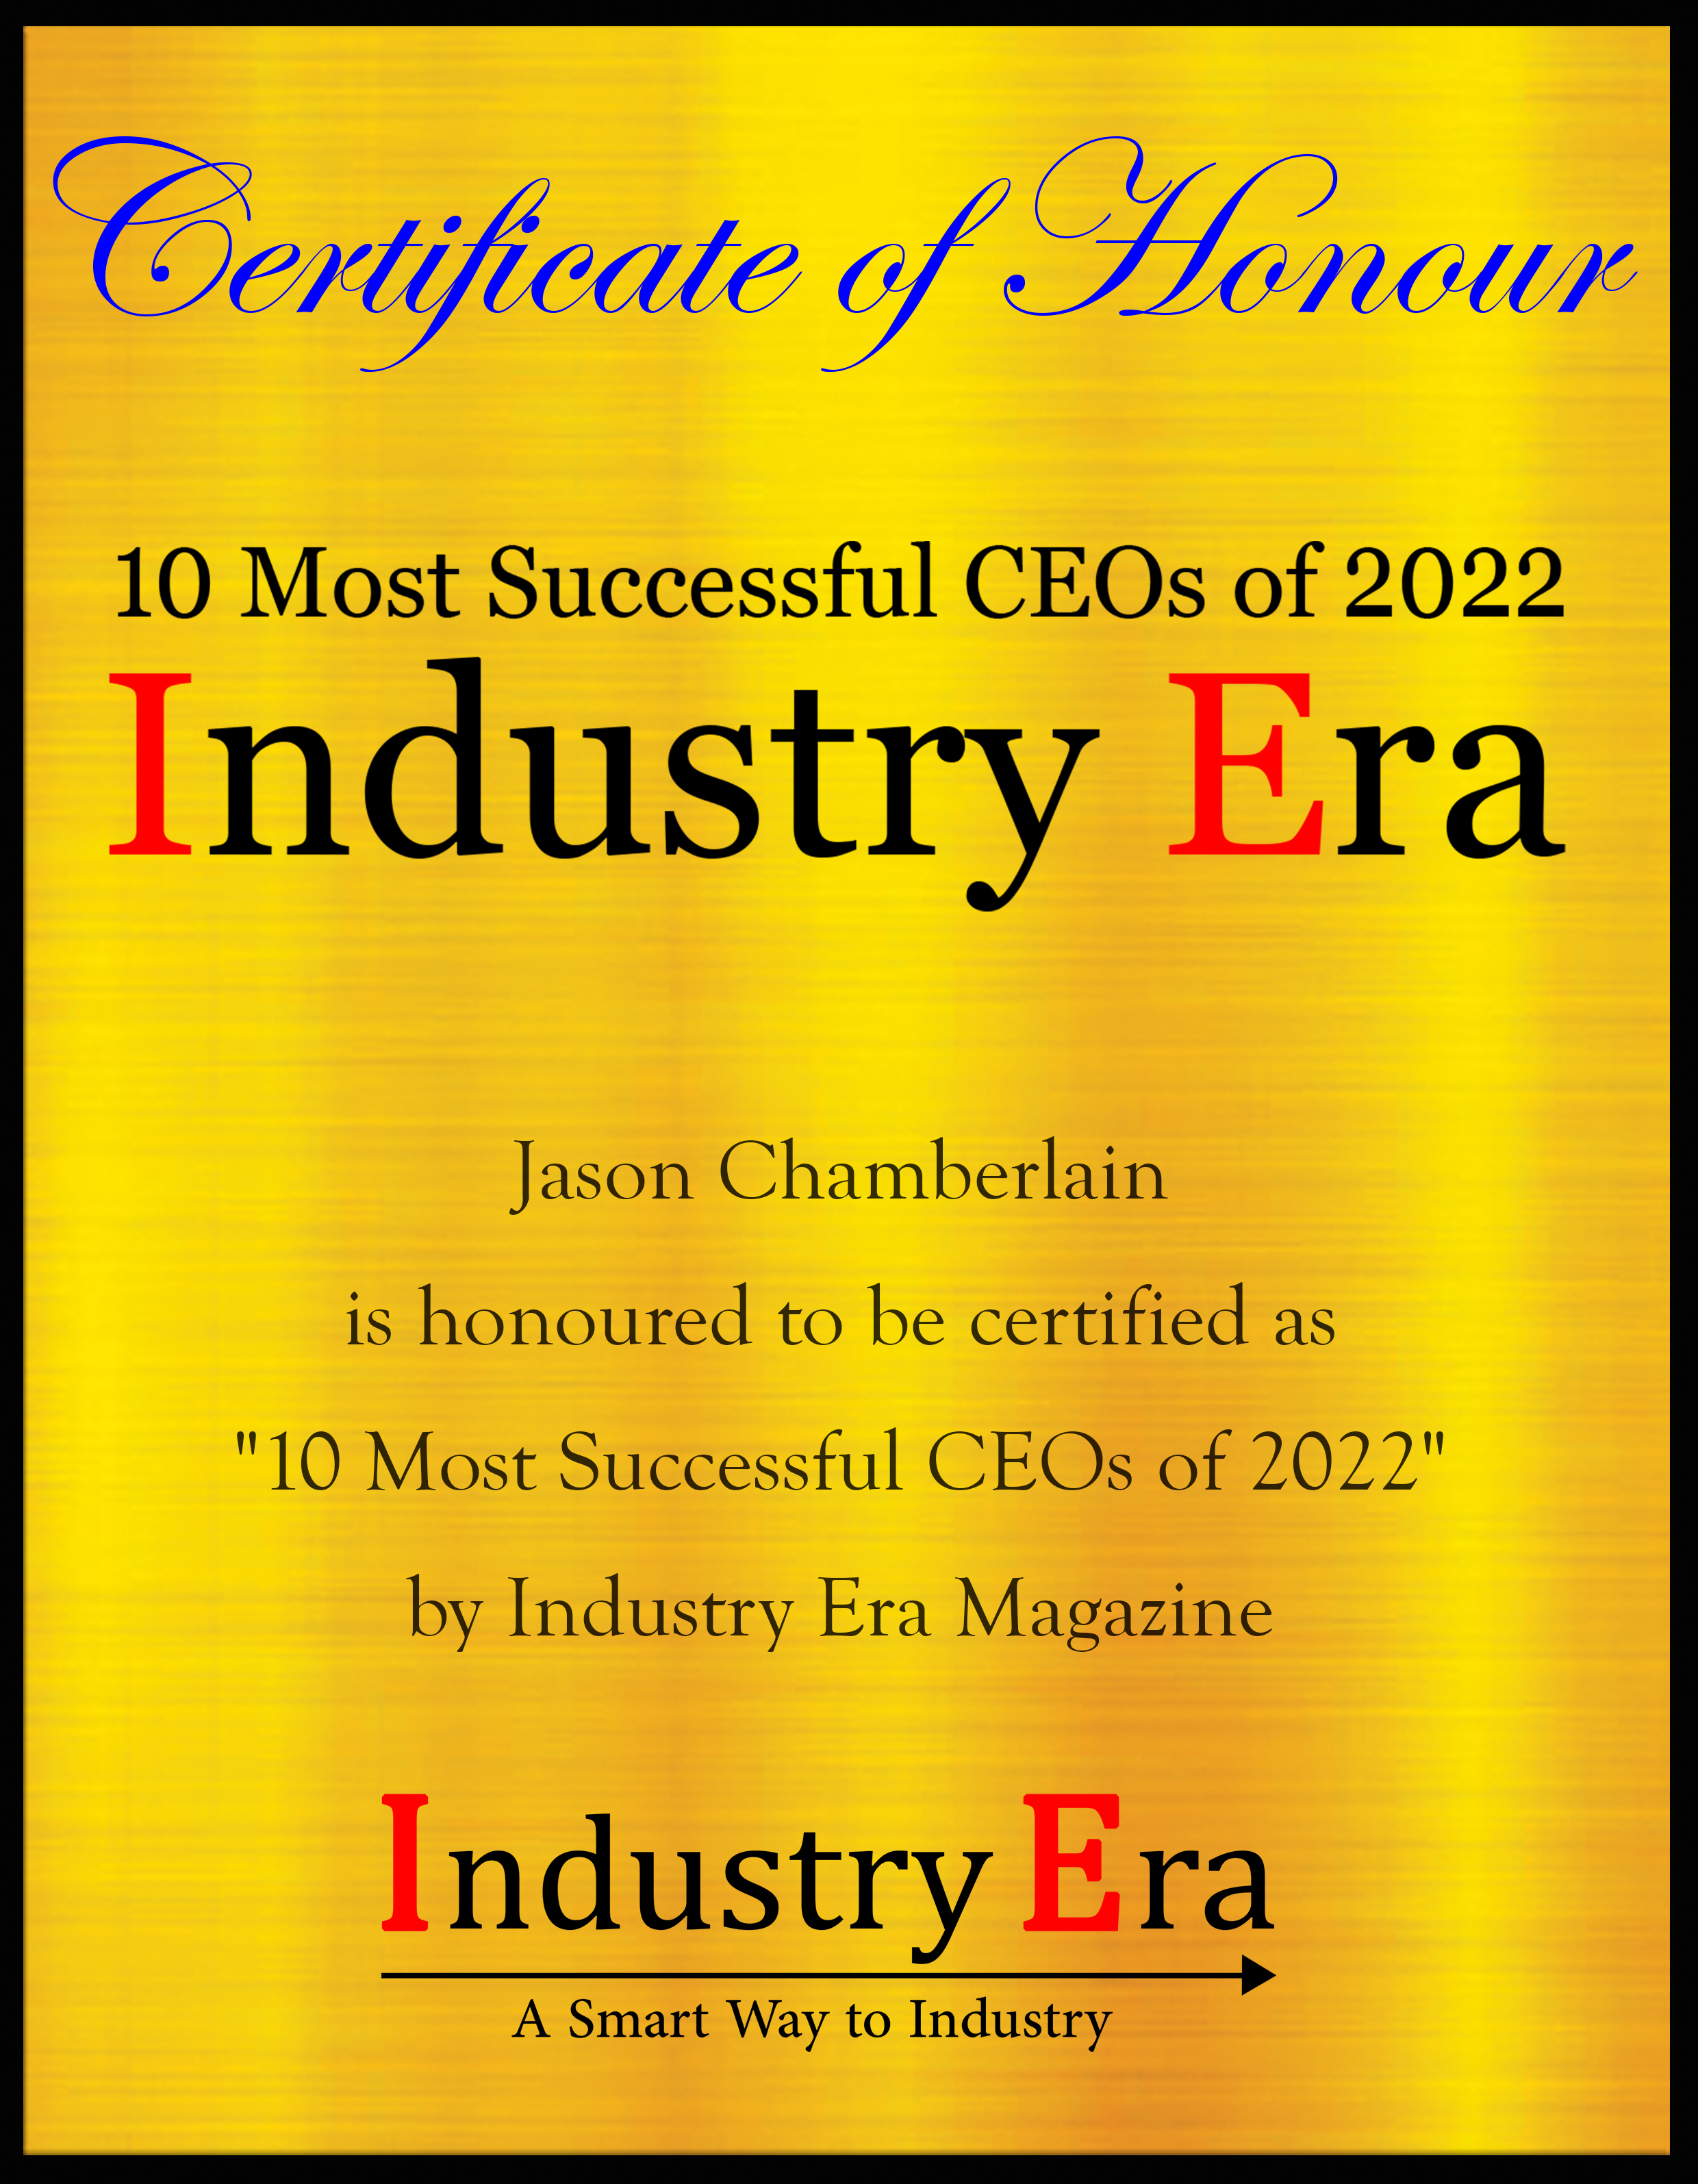 Jason Chamberlain, CEO of Tectonix Steel Certificate